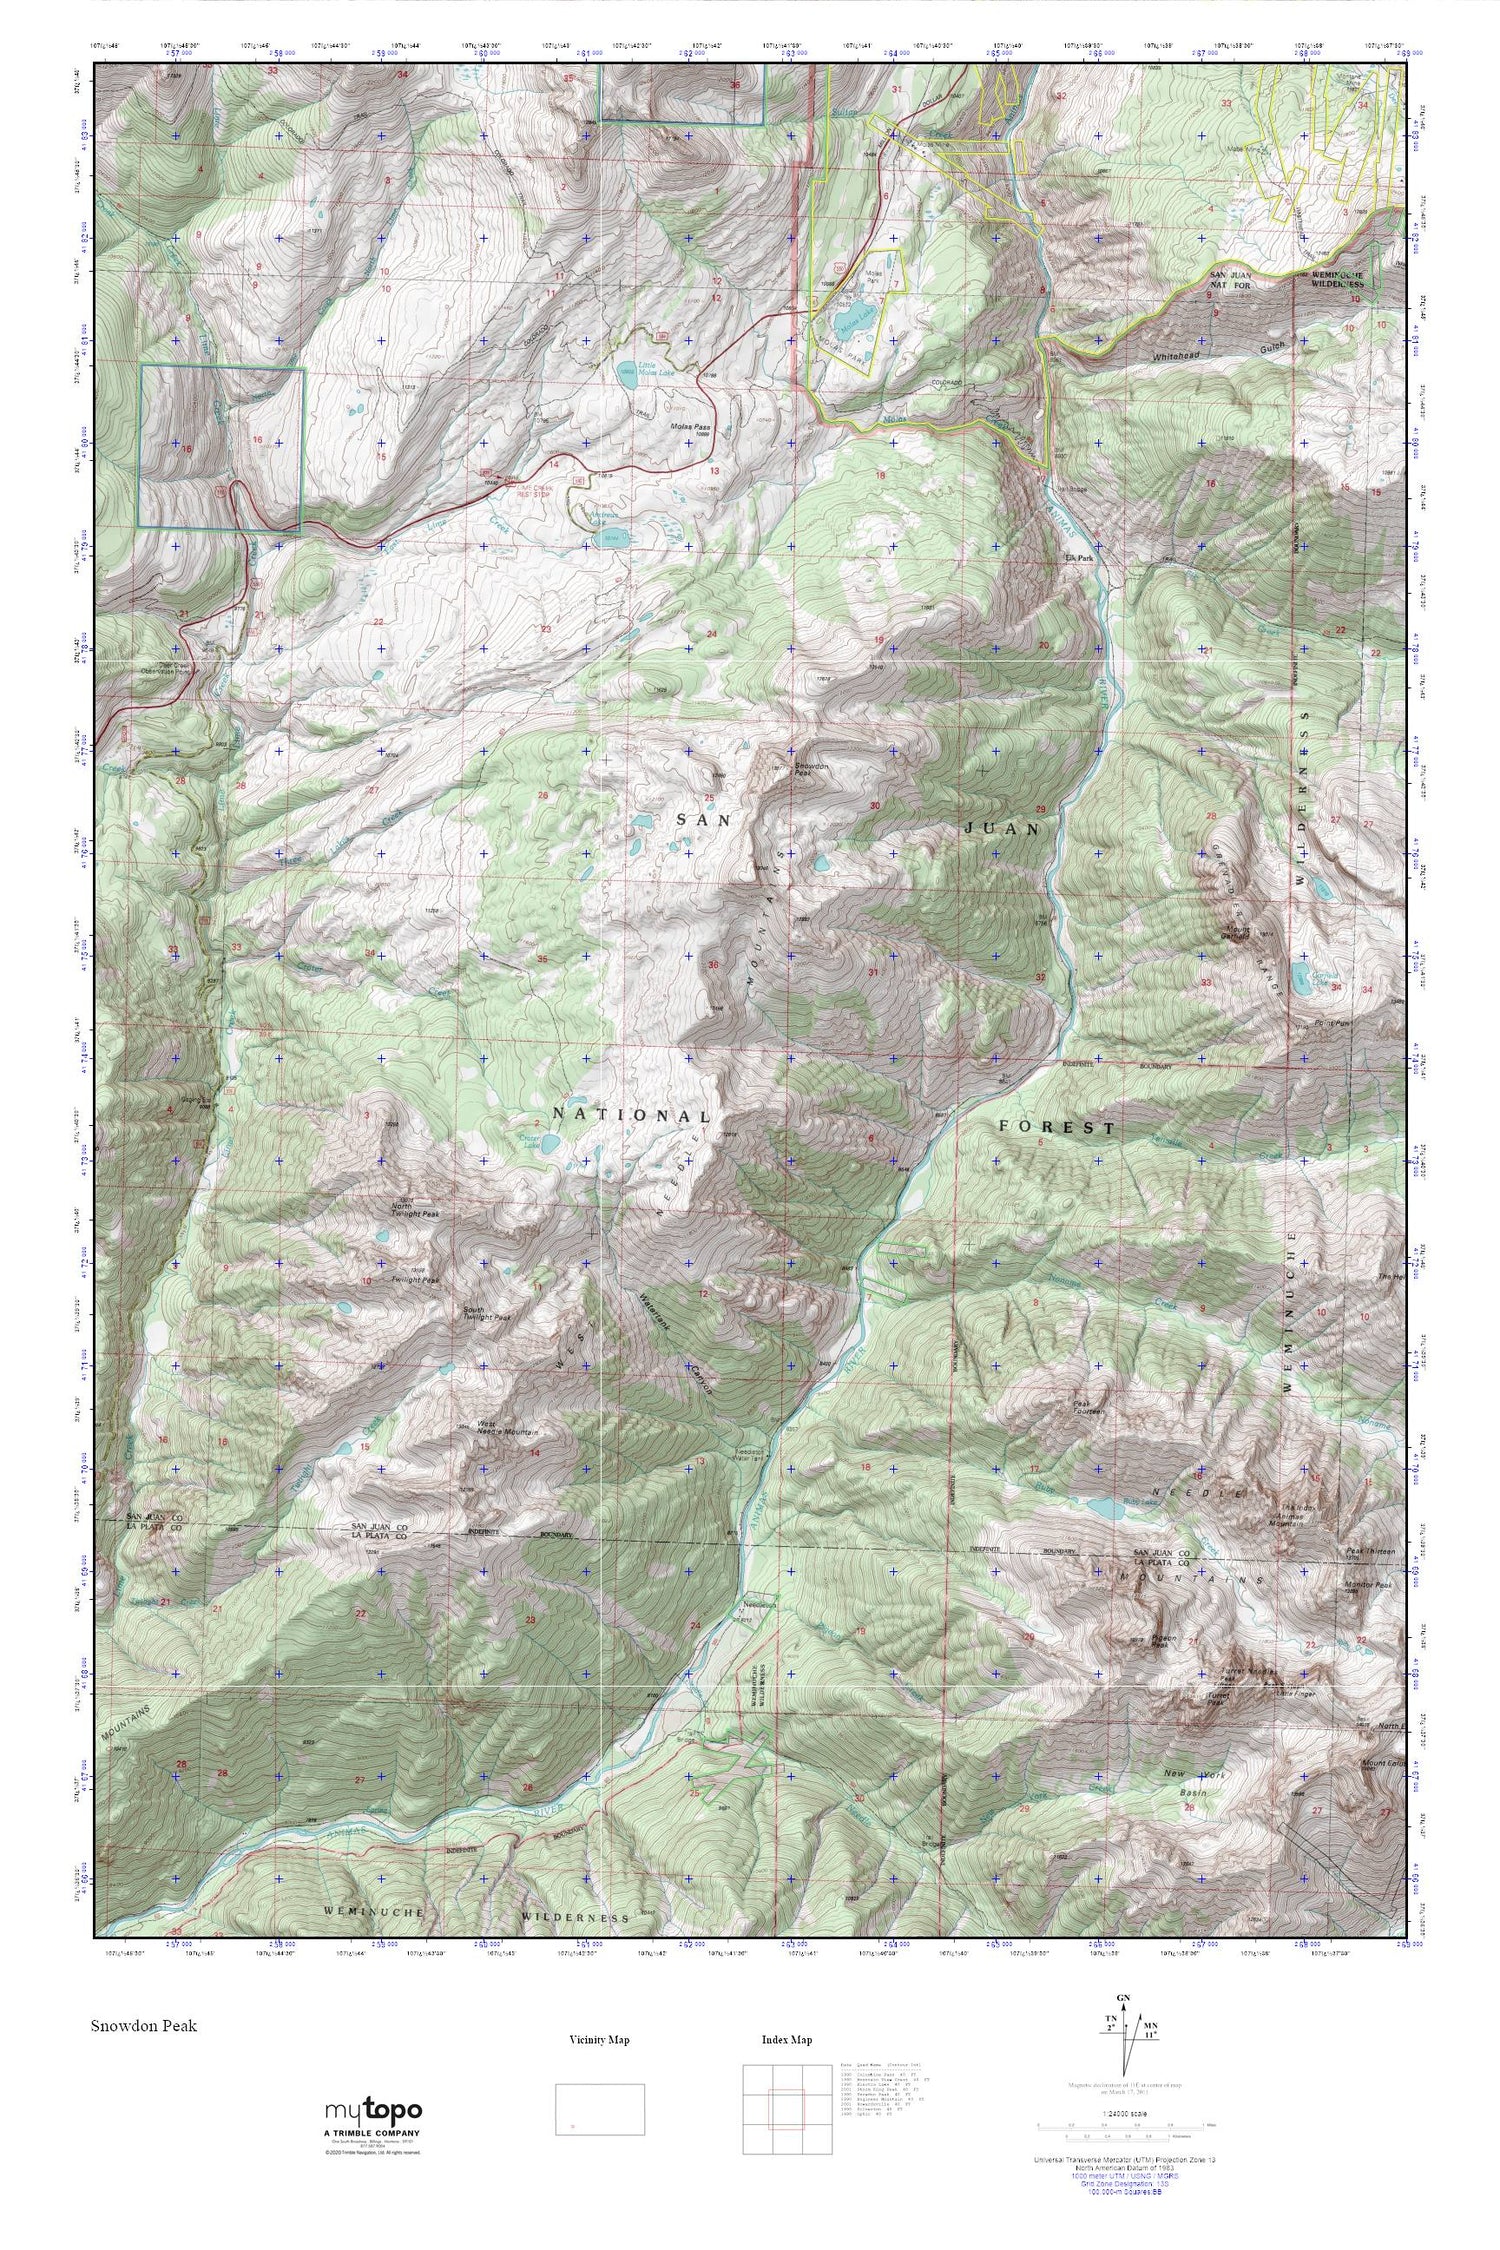 Snowdon Peak MyTopo Explorer Series Map Image